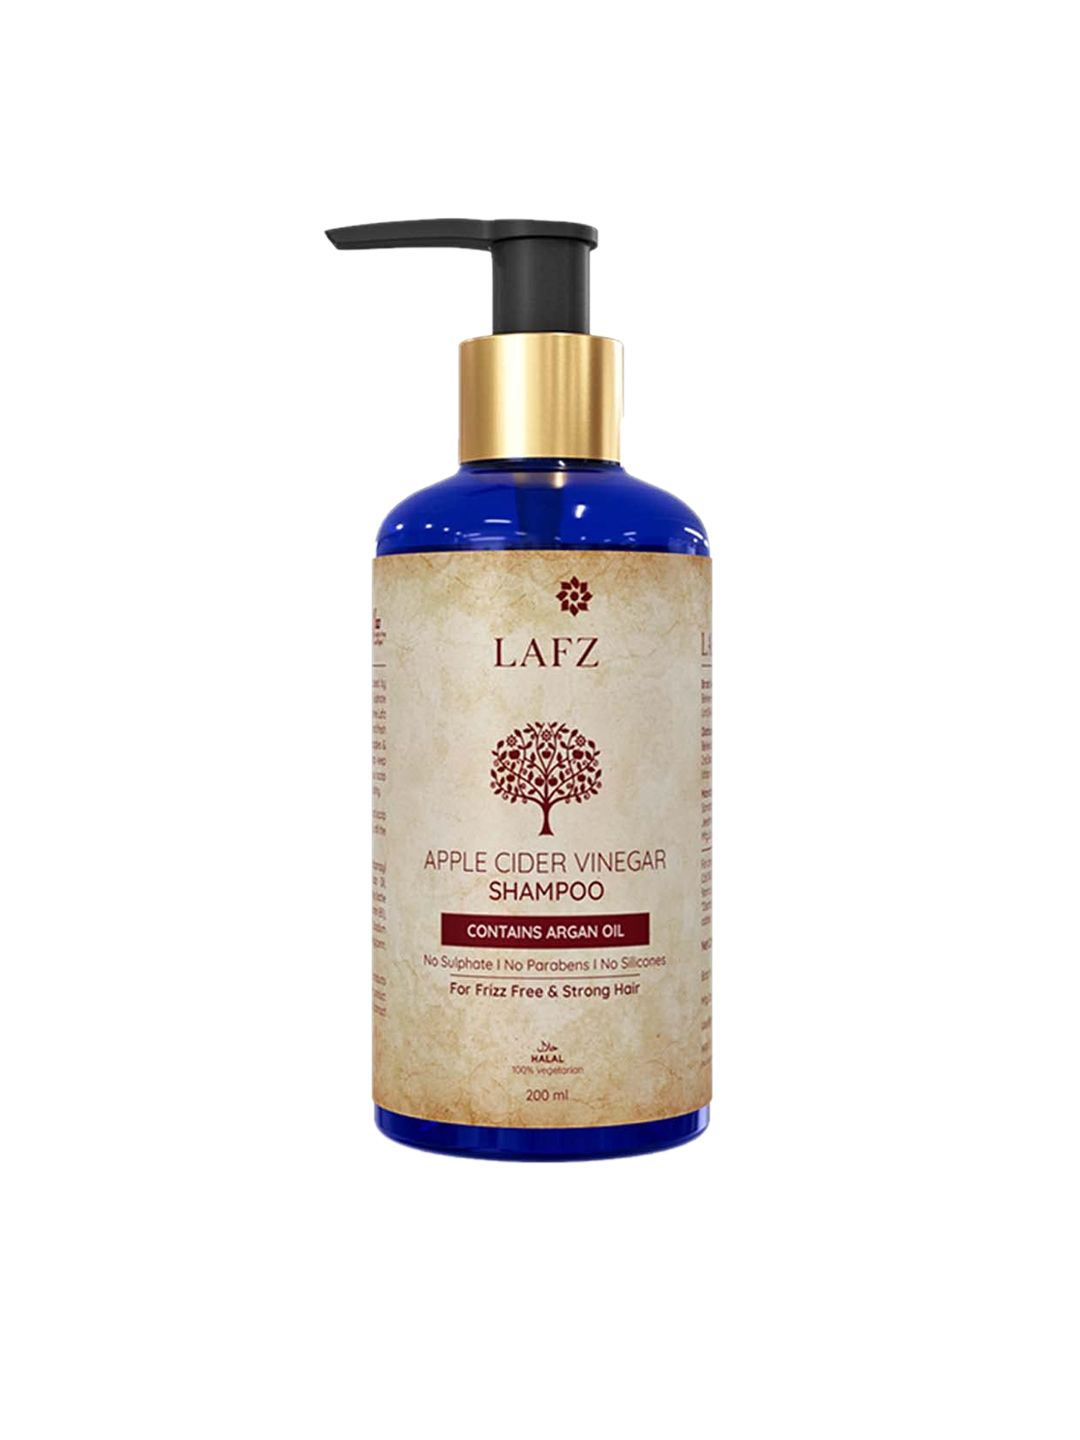 LAFZ Apple Cider Vinegar Shampoo with Argan Oil - 200 ml Price in India